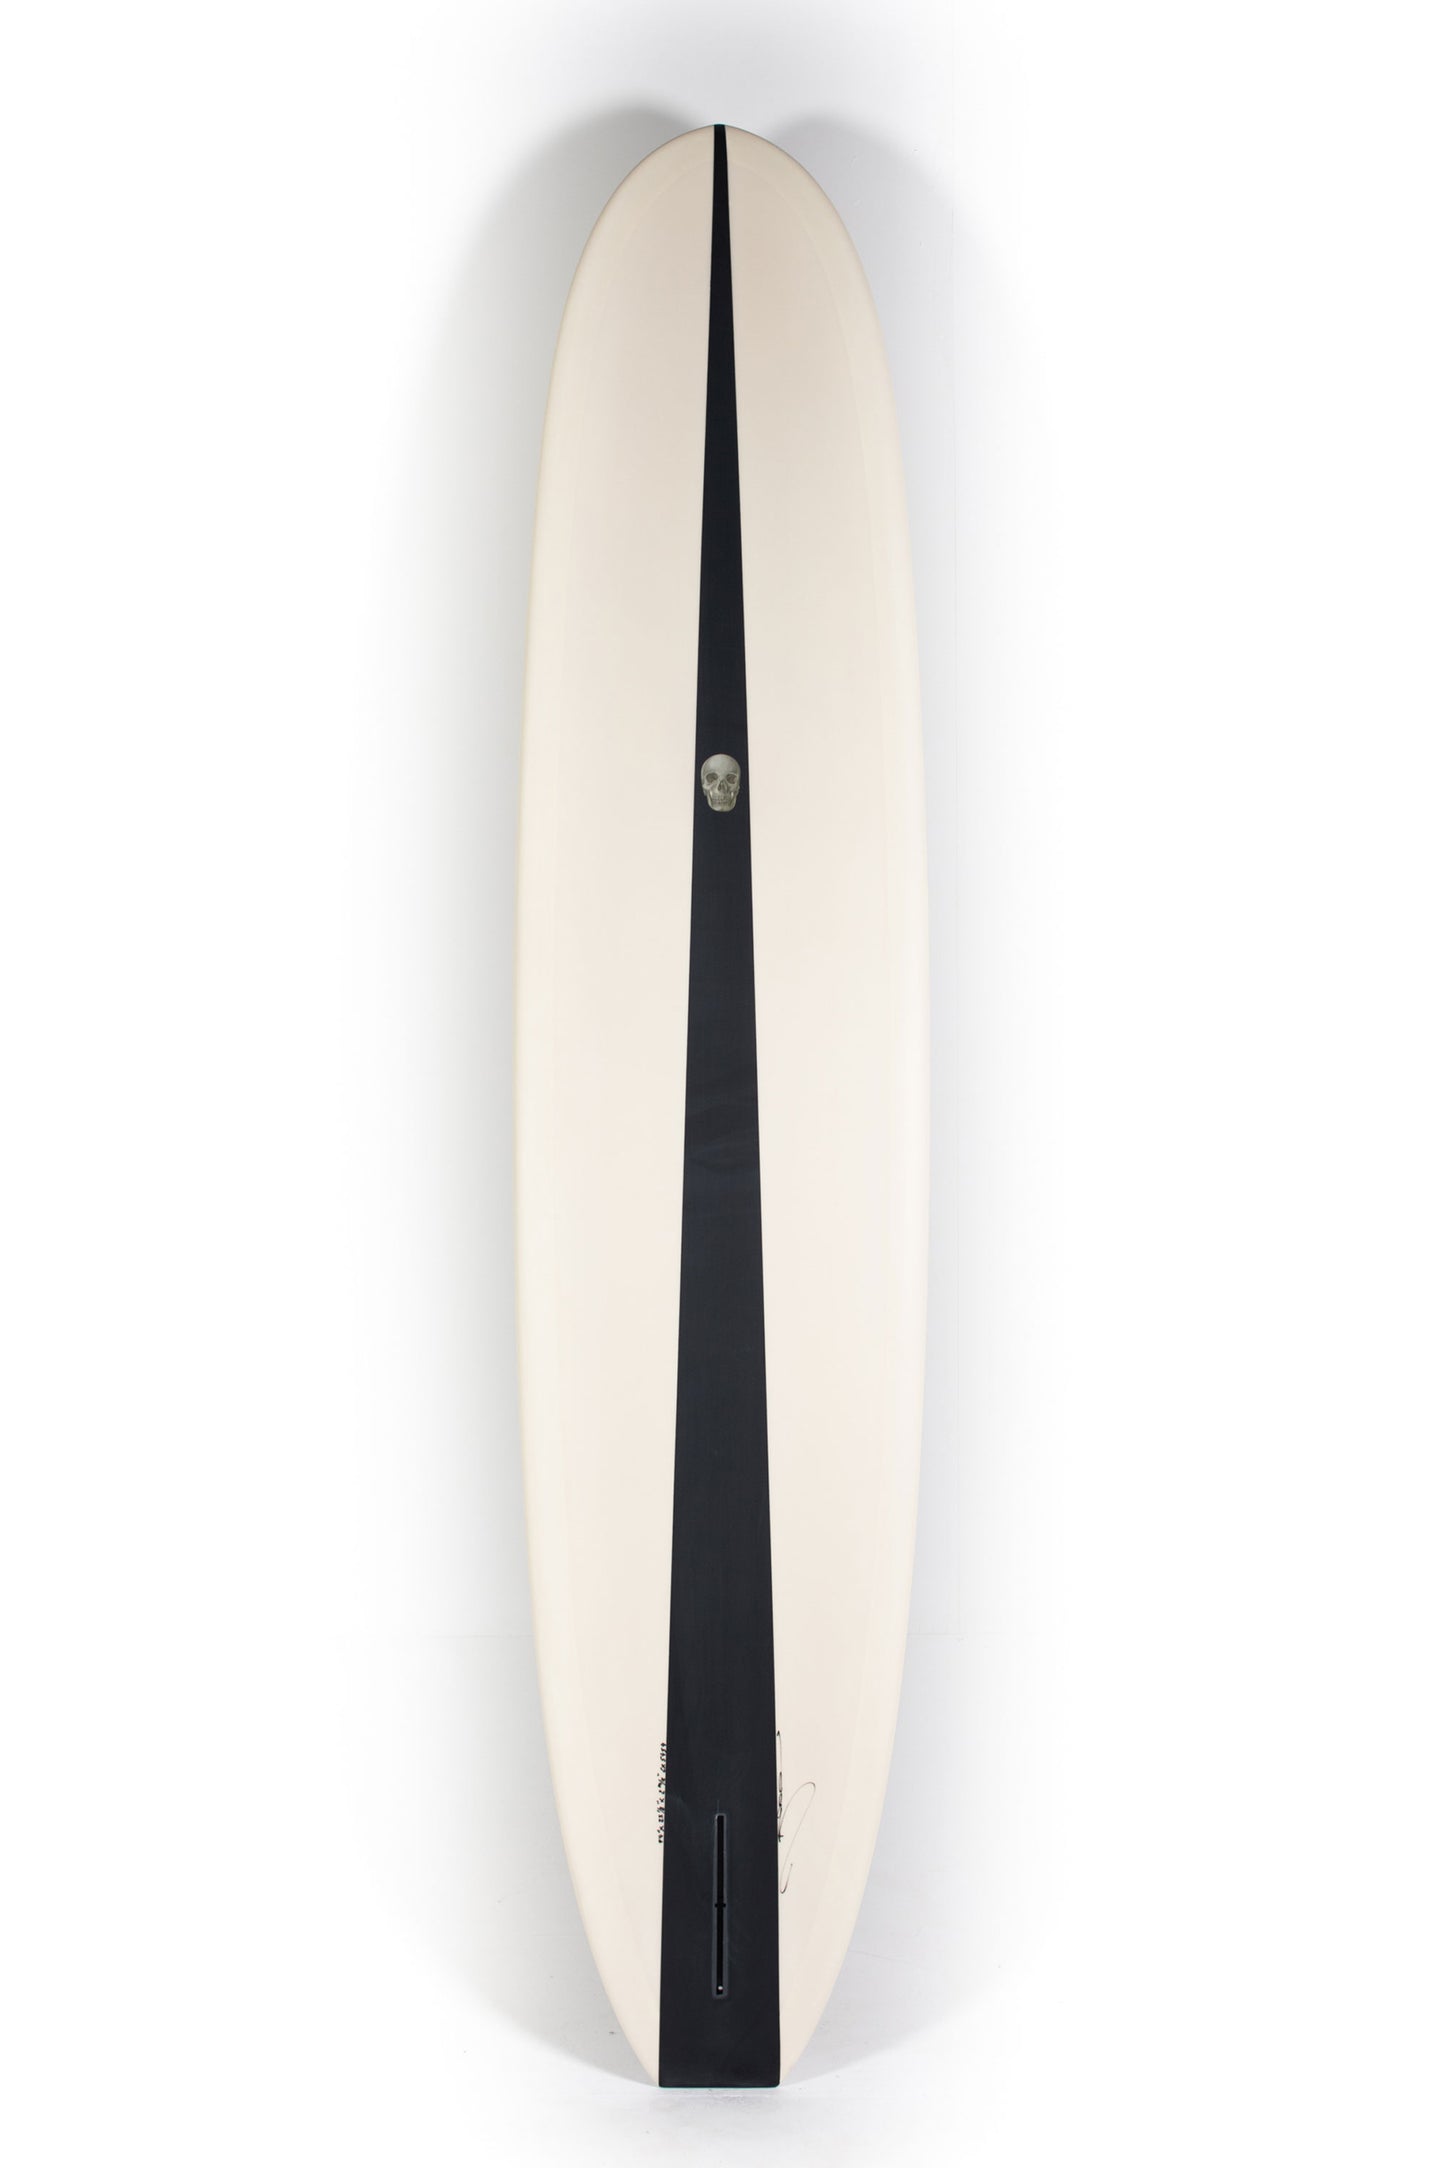 Pukas Surf Shop - Christenson Surfboard  - TRADESMAN by Chris Christenson - 9'4” x 23 1/8 x 2 13/16 - CX05454